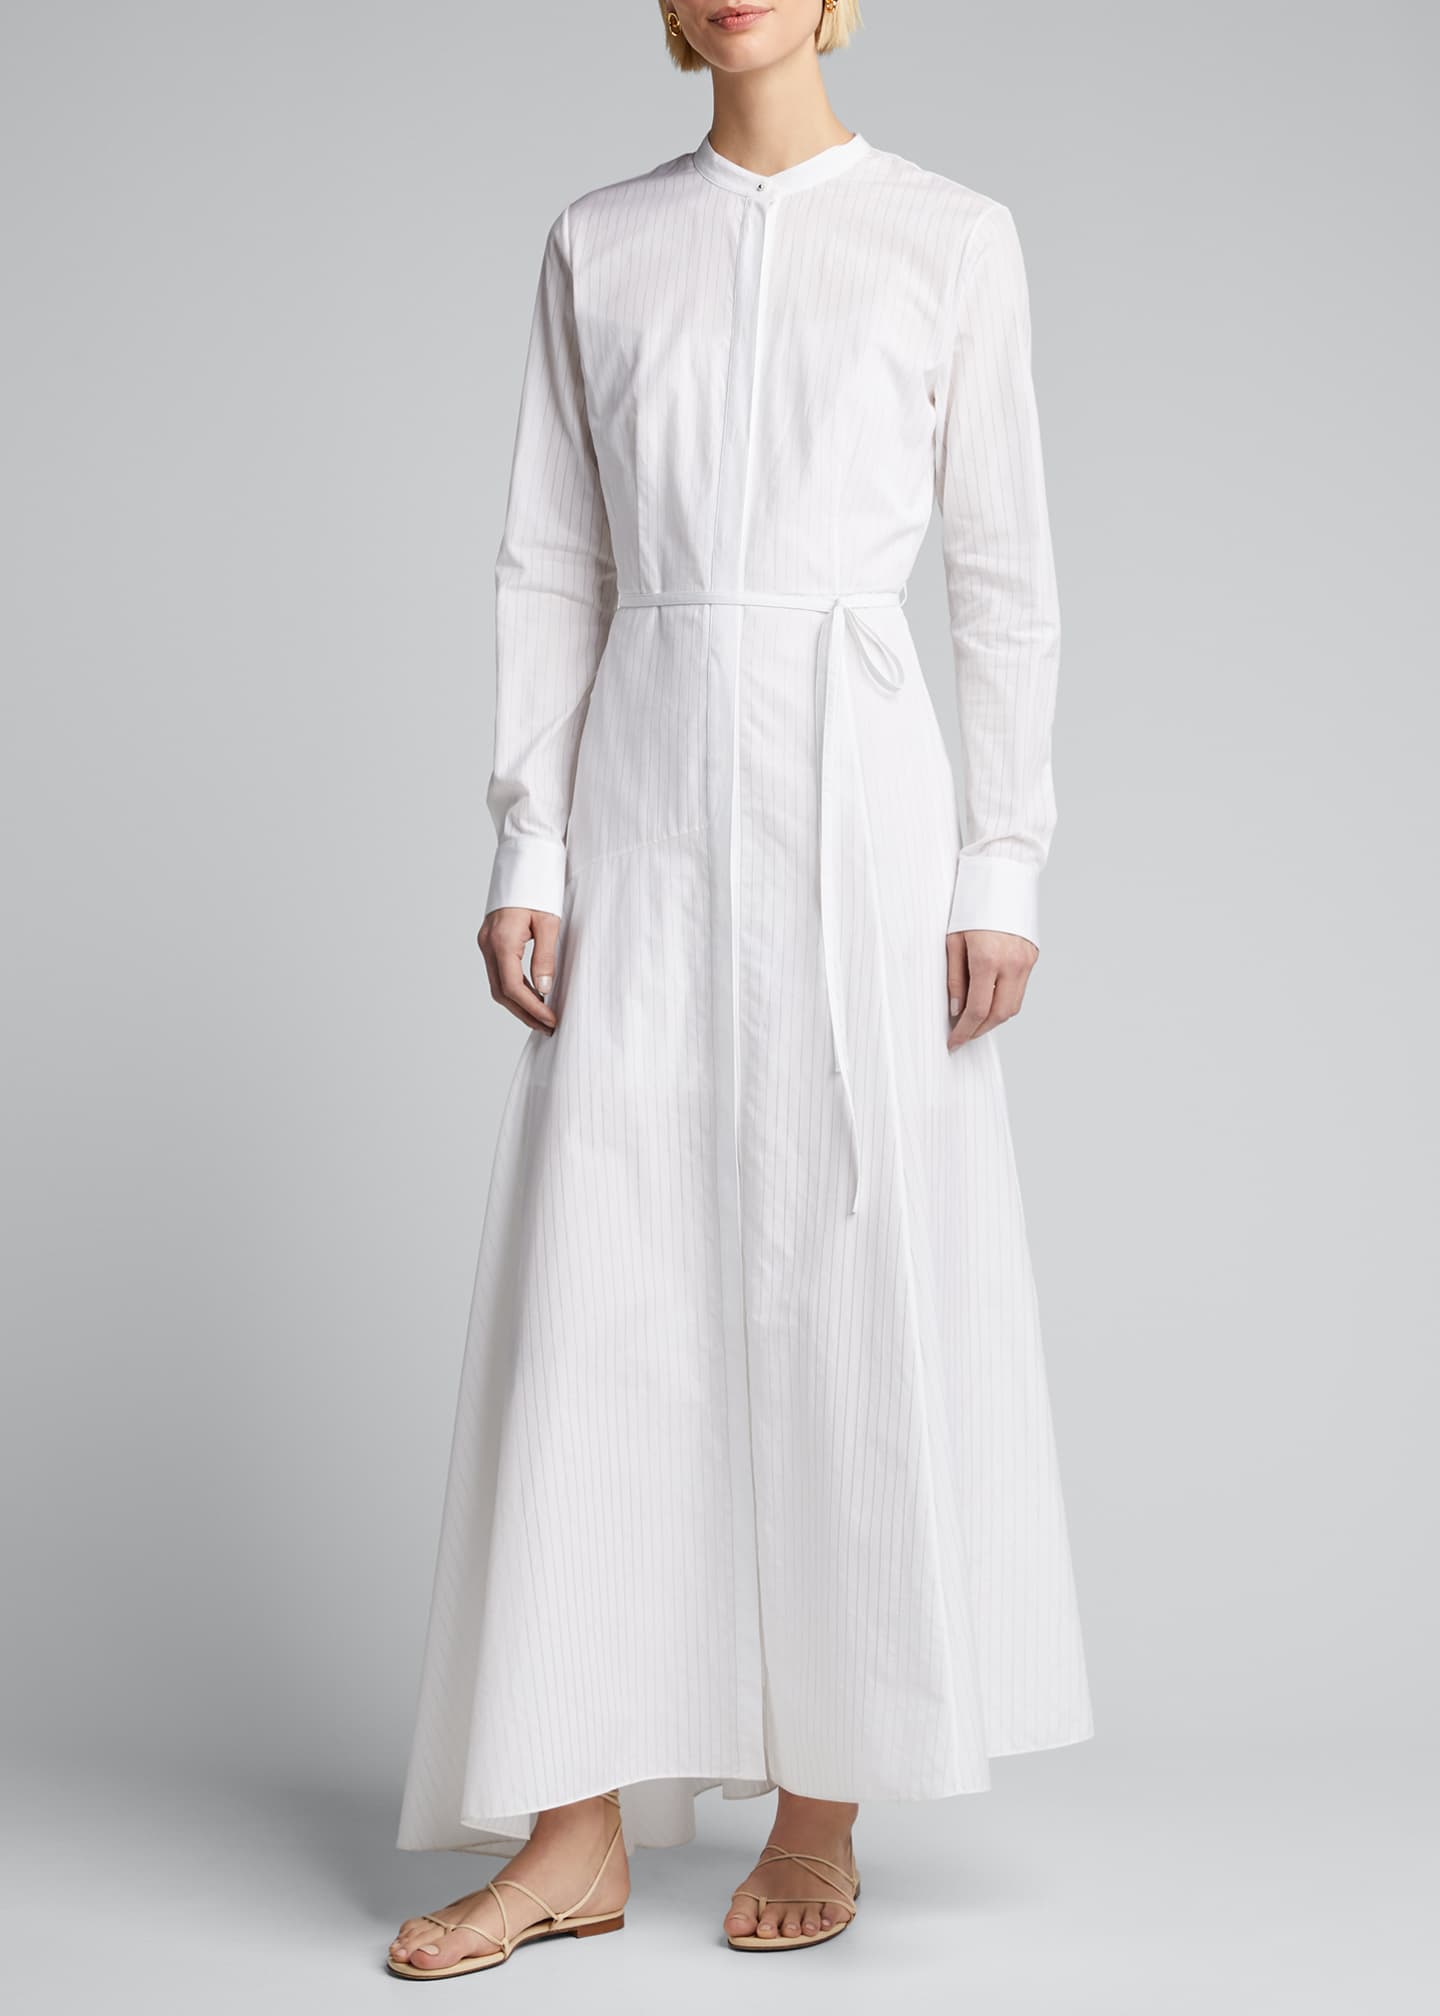 Theory Asymmetric Striped Cotton Dress - Bergdorf Goodman